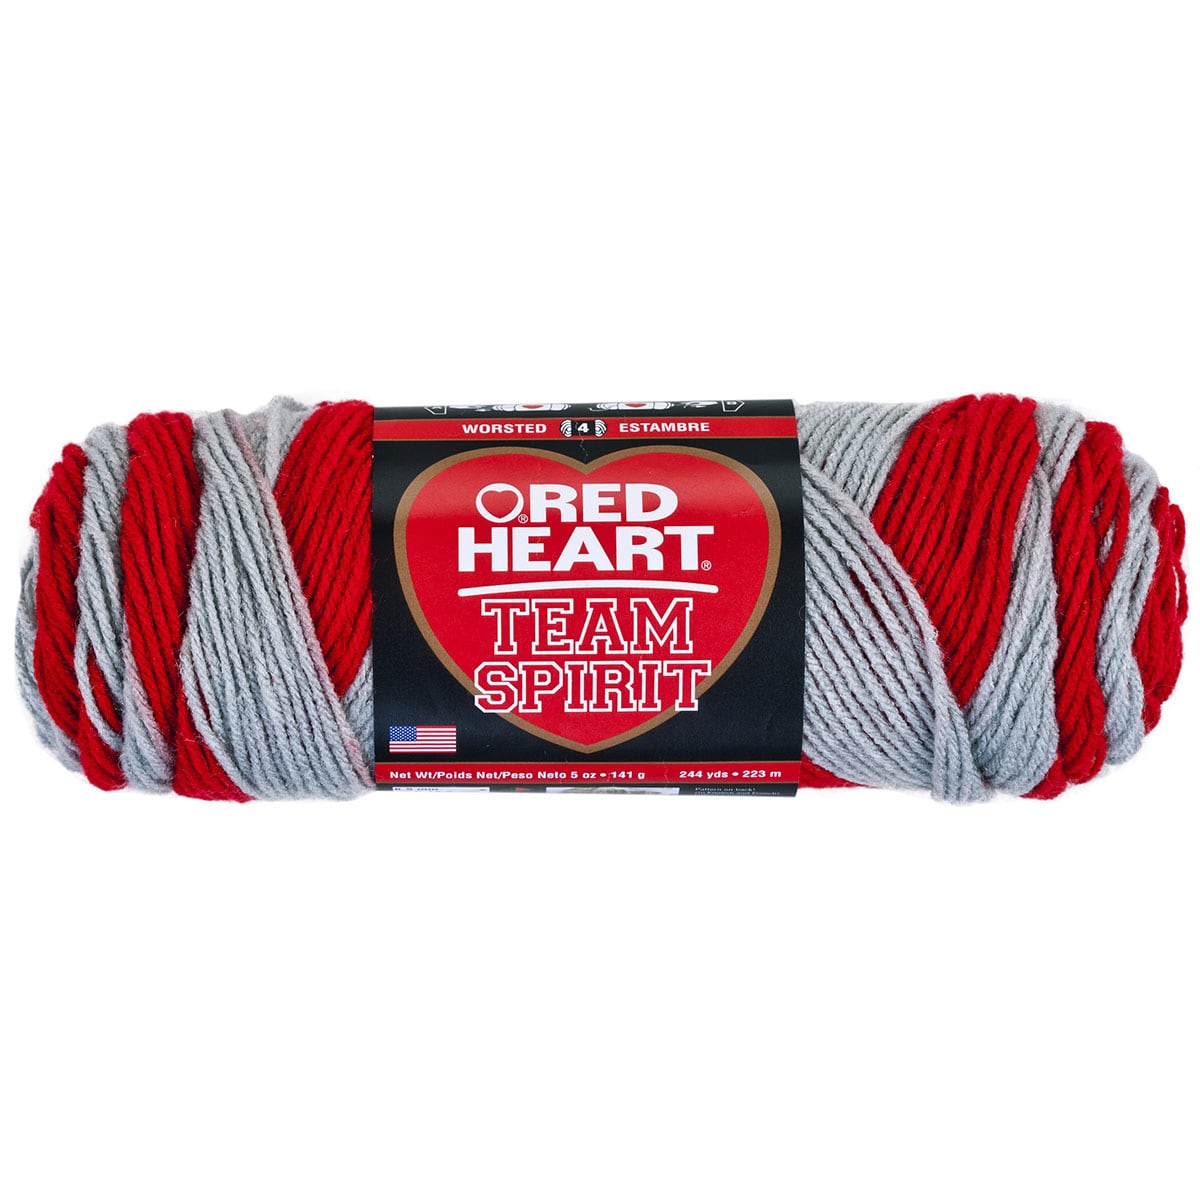 C&C Red Heart Team Spirit Yarn 5oz Red/Grey - image 2 of 2